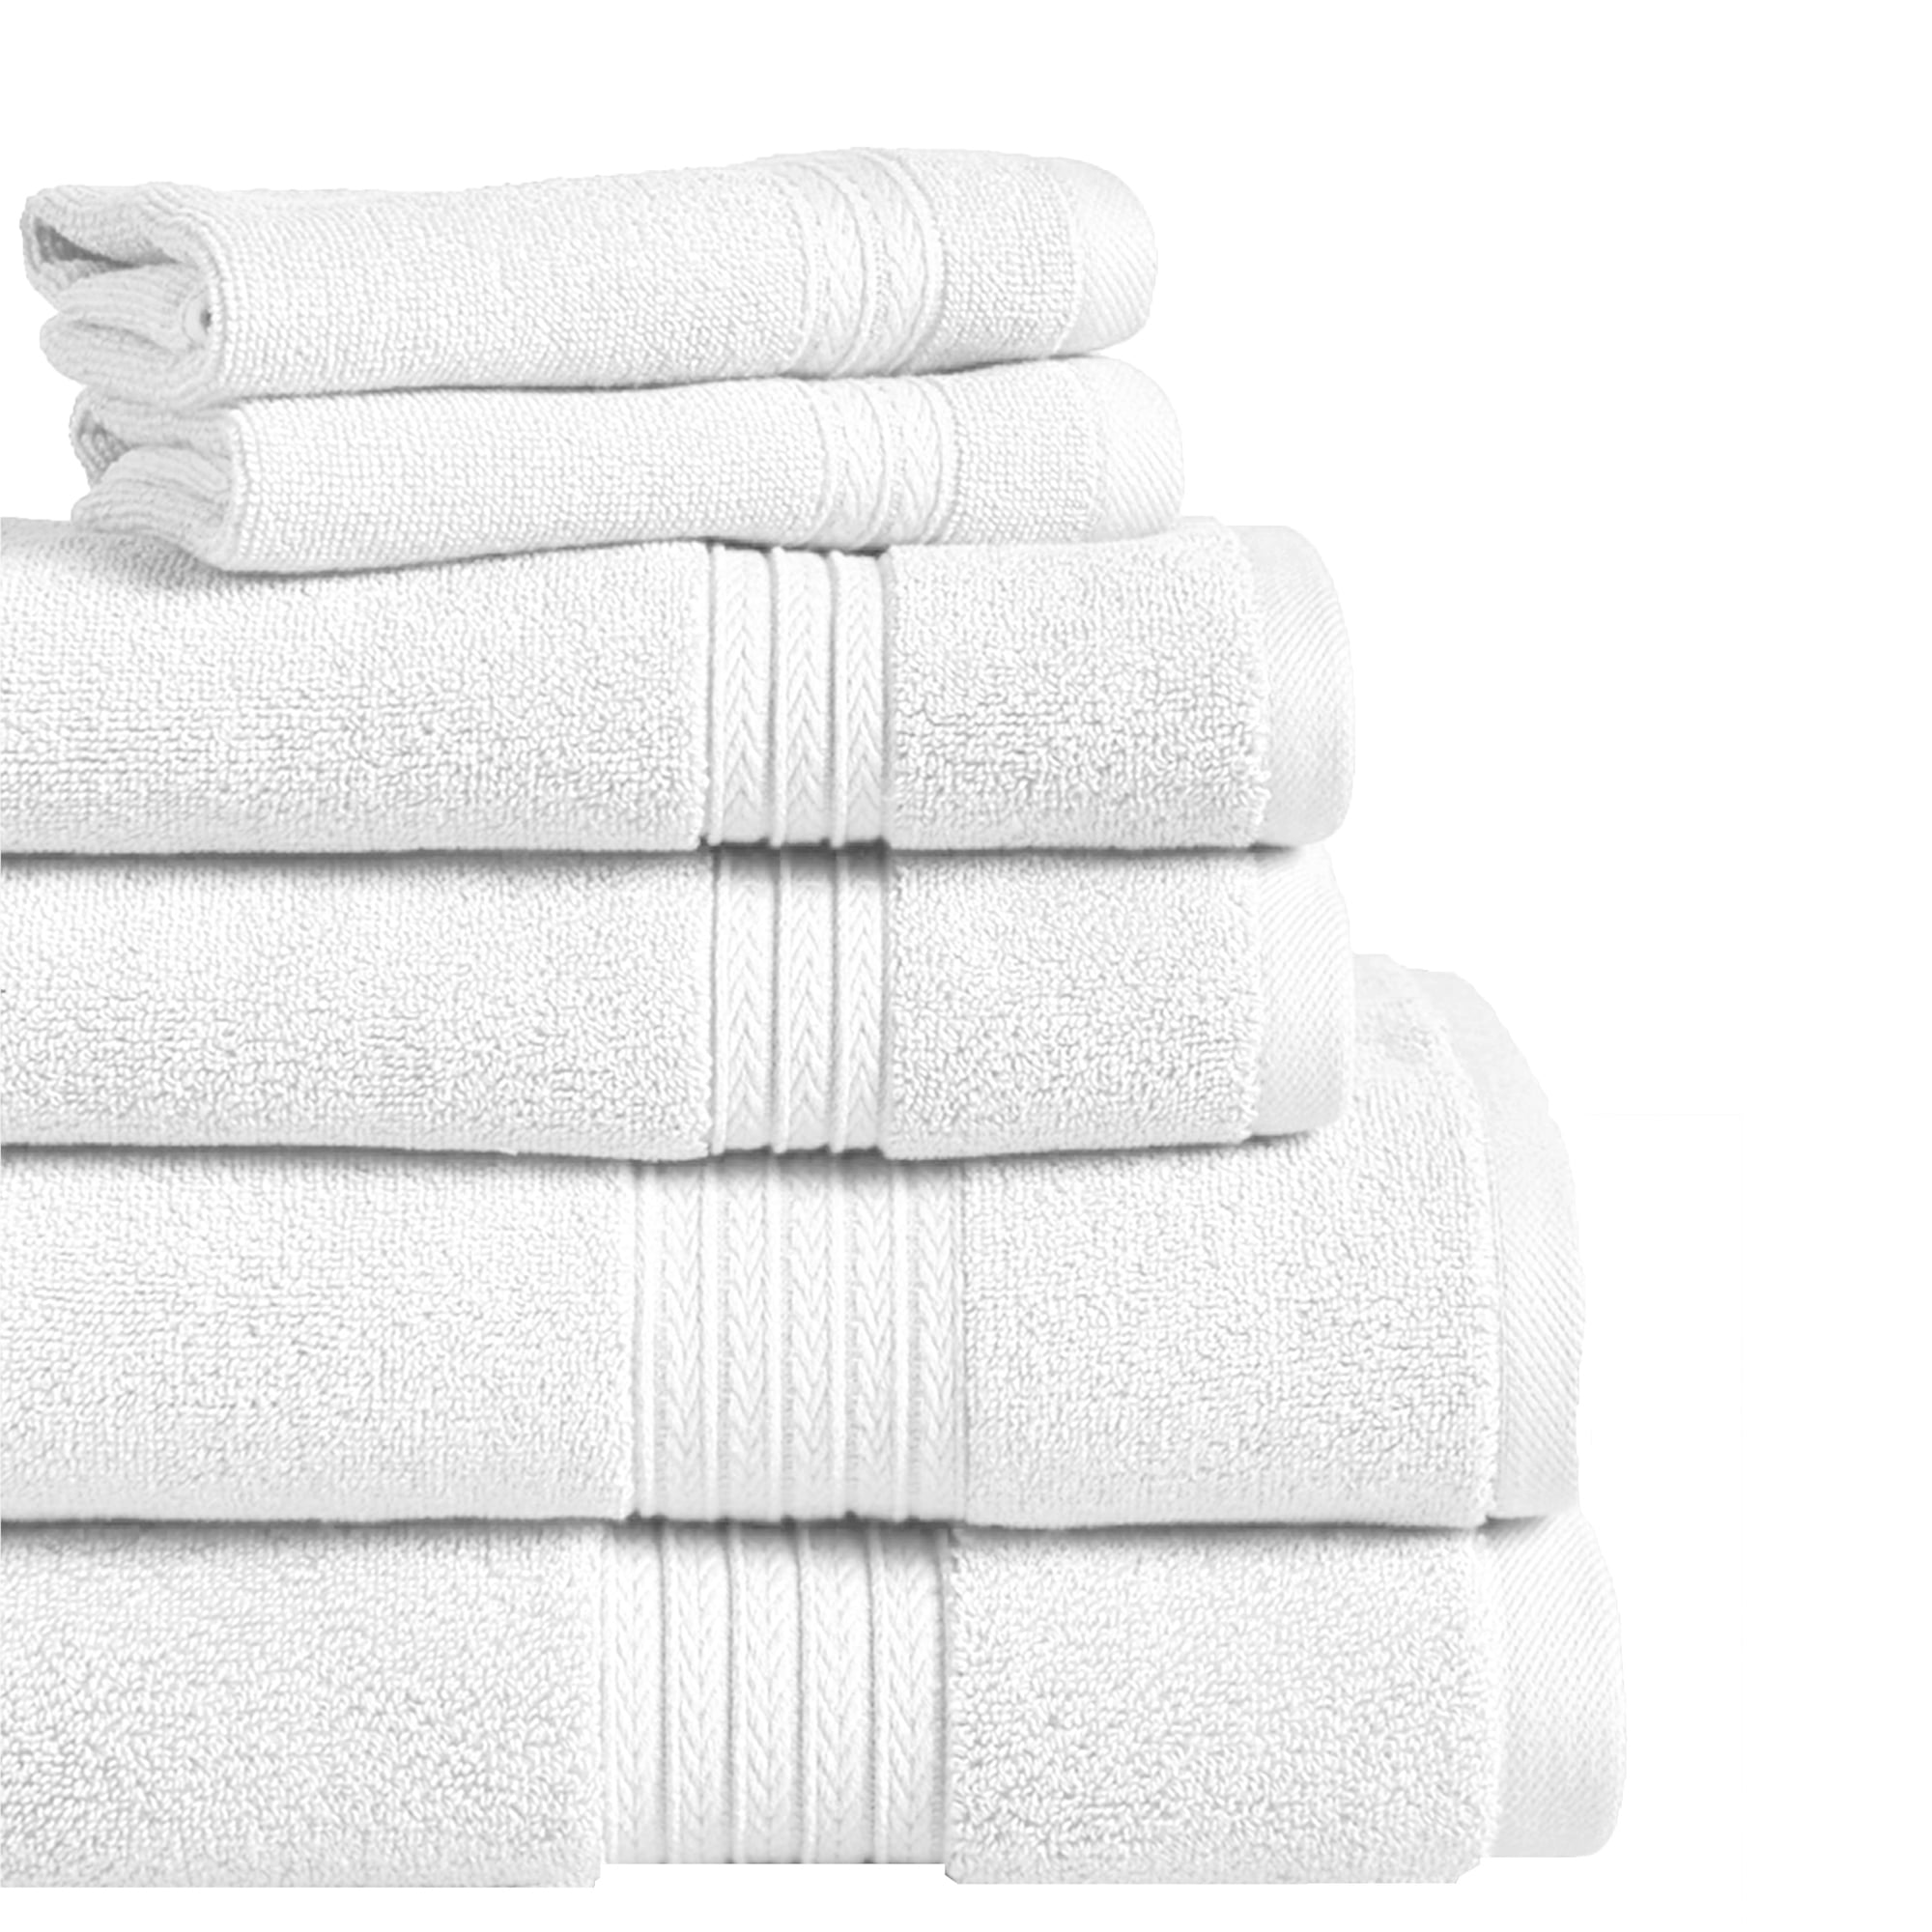 NEW 14 Piece 100% Cotton 500 Gram Bath Hand Face Towel Set Soft Touch FREE SHIP 